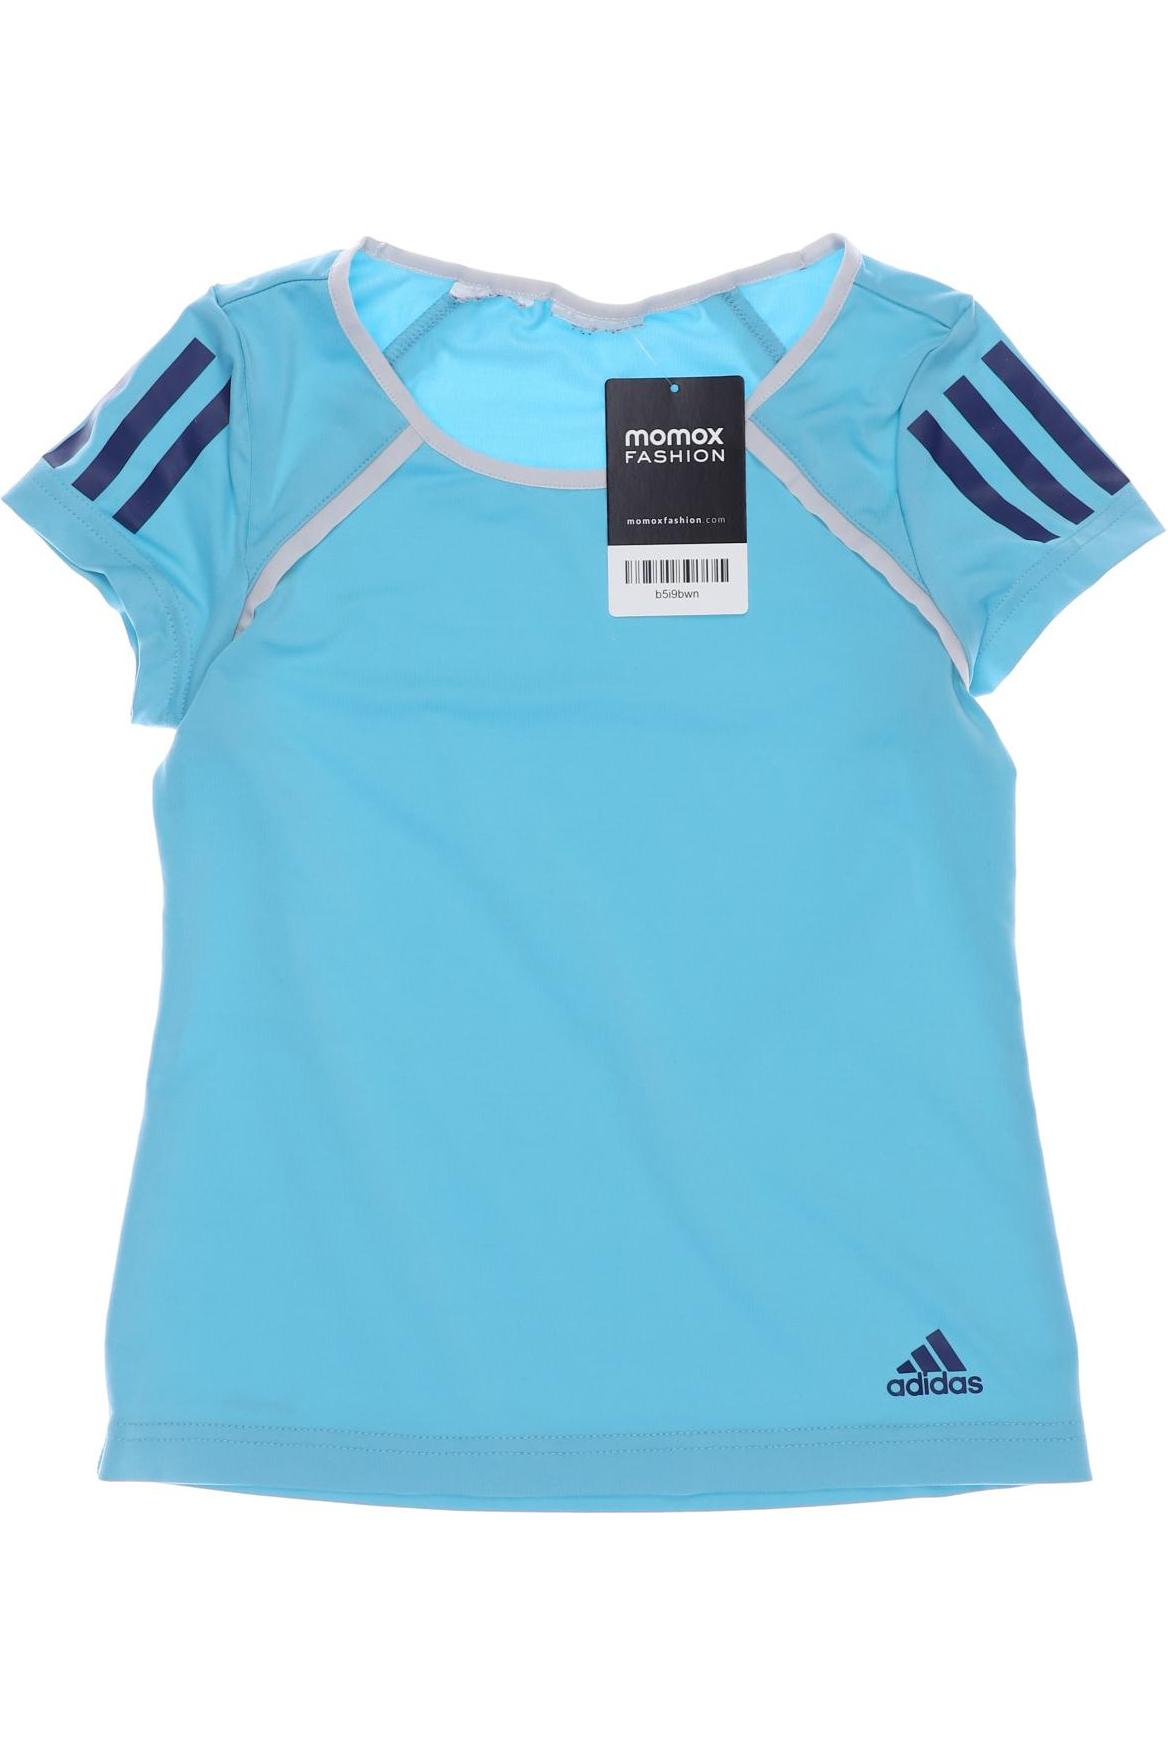 adidas Damen T-Shirt, blau, Gr. 116 von Adidas